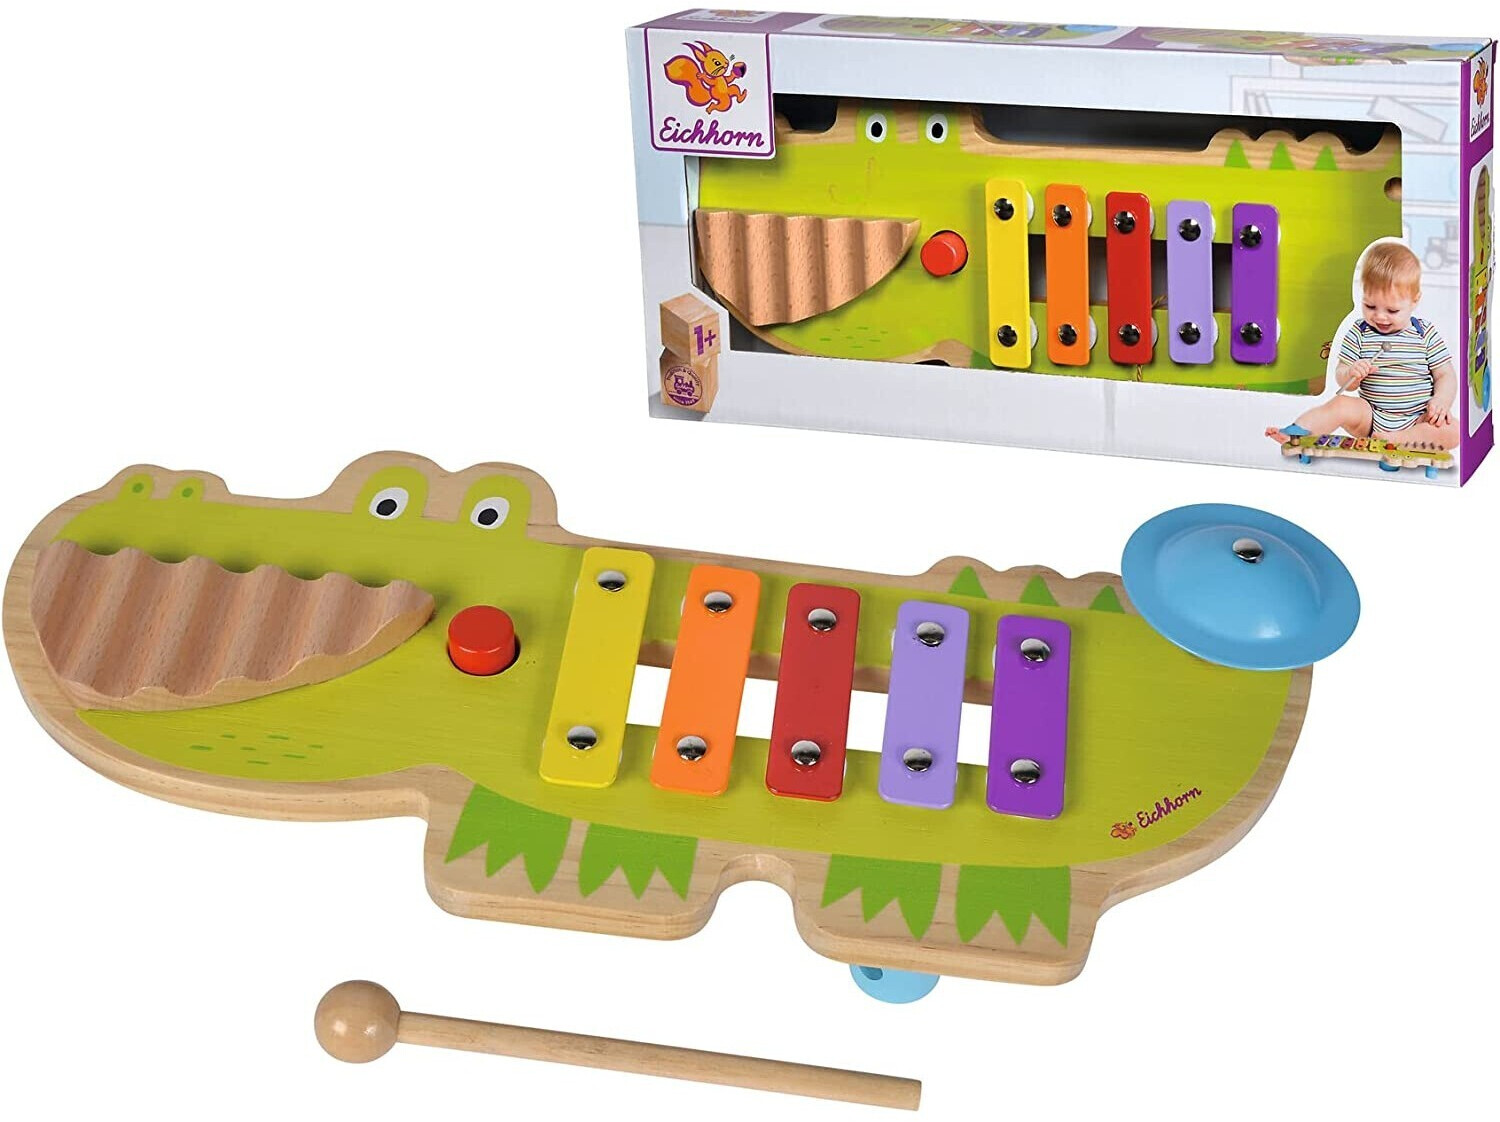 Farbiges Xylophon für Kinder - Krokodil